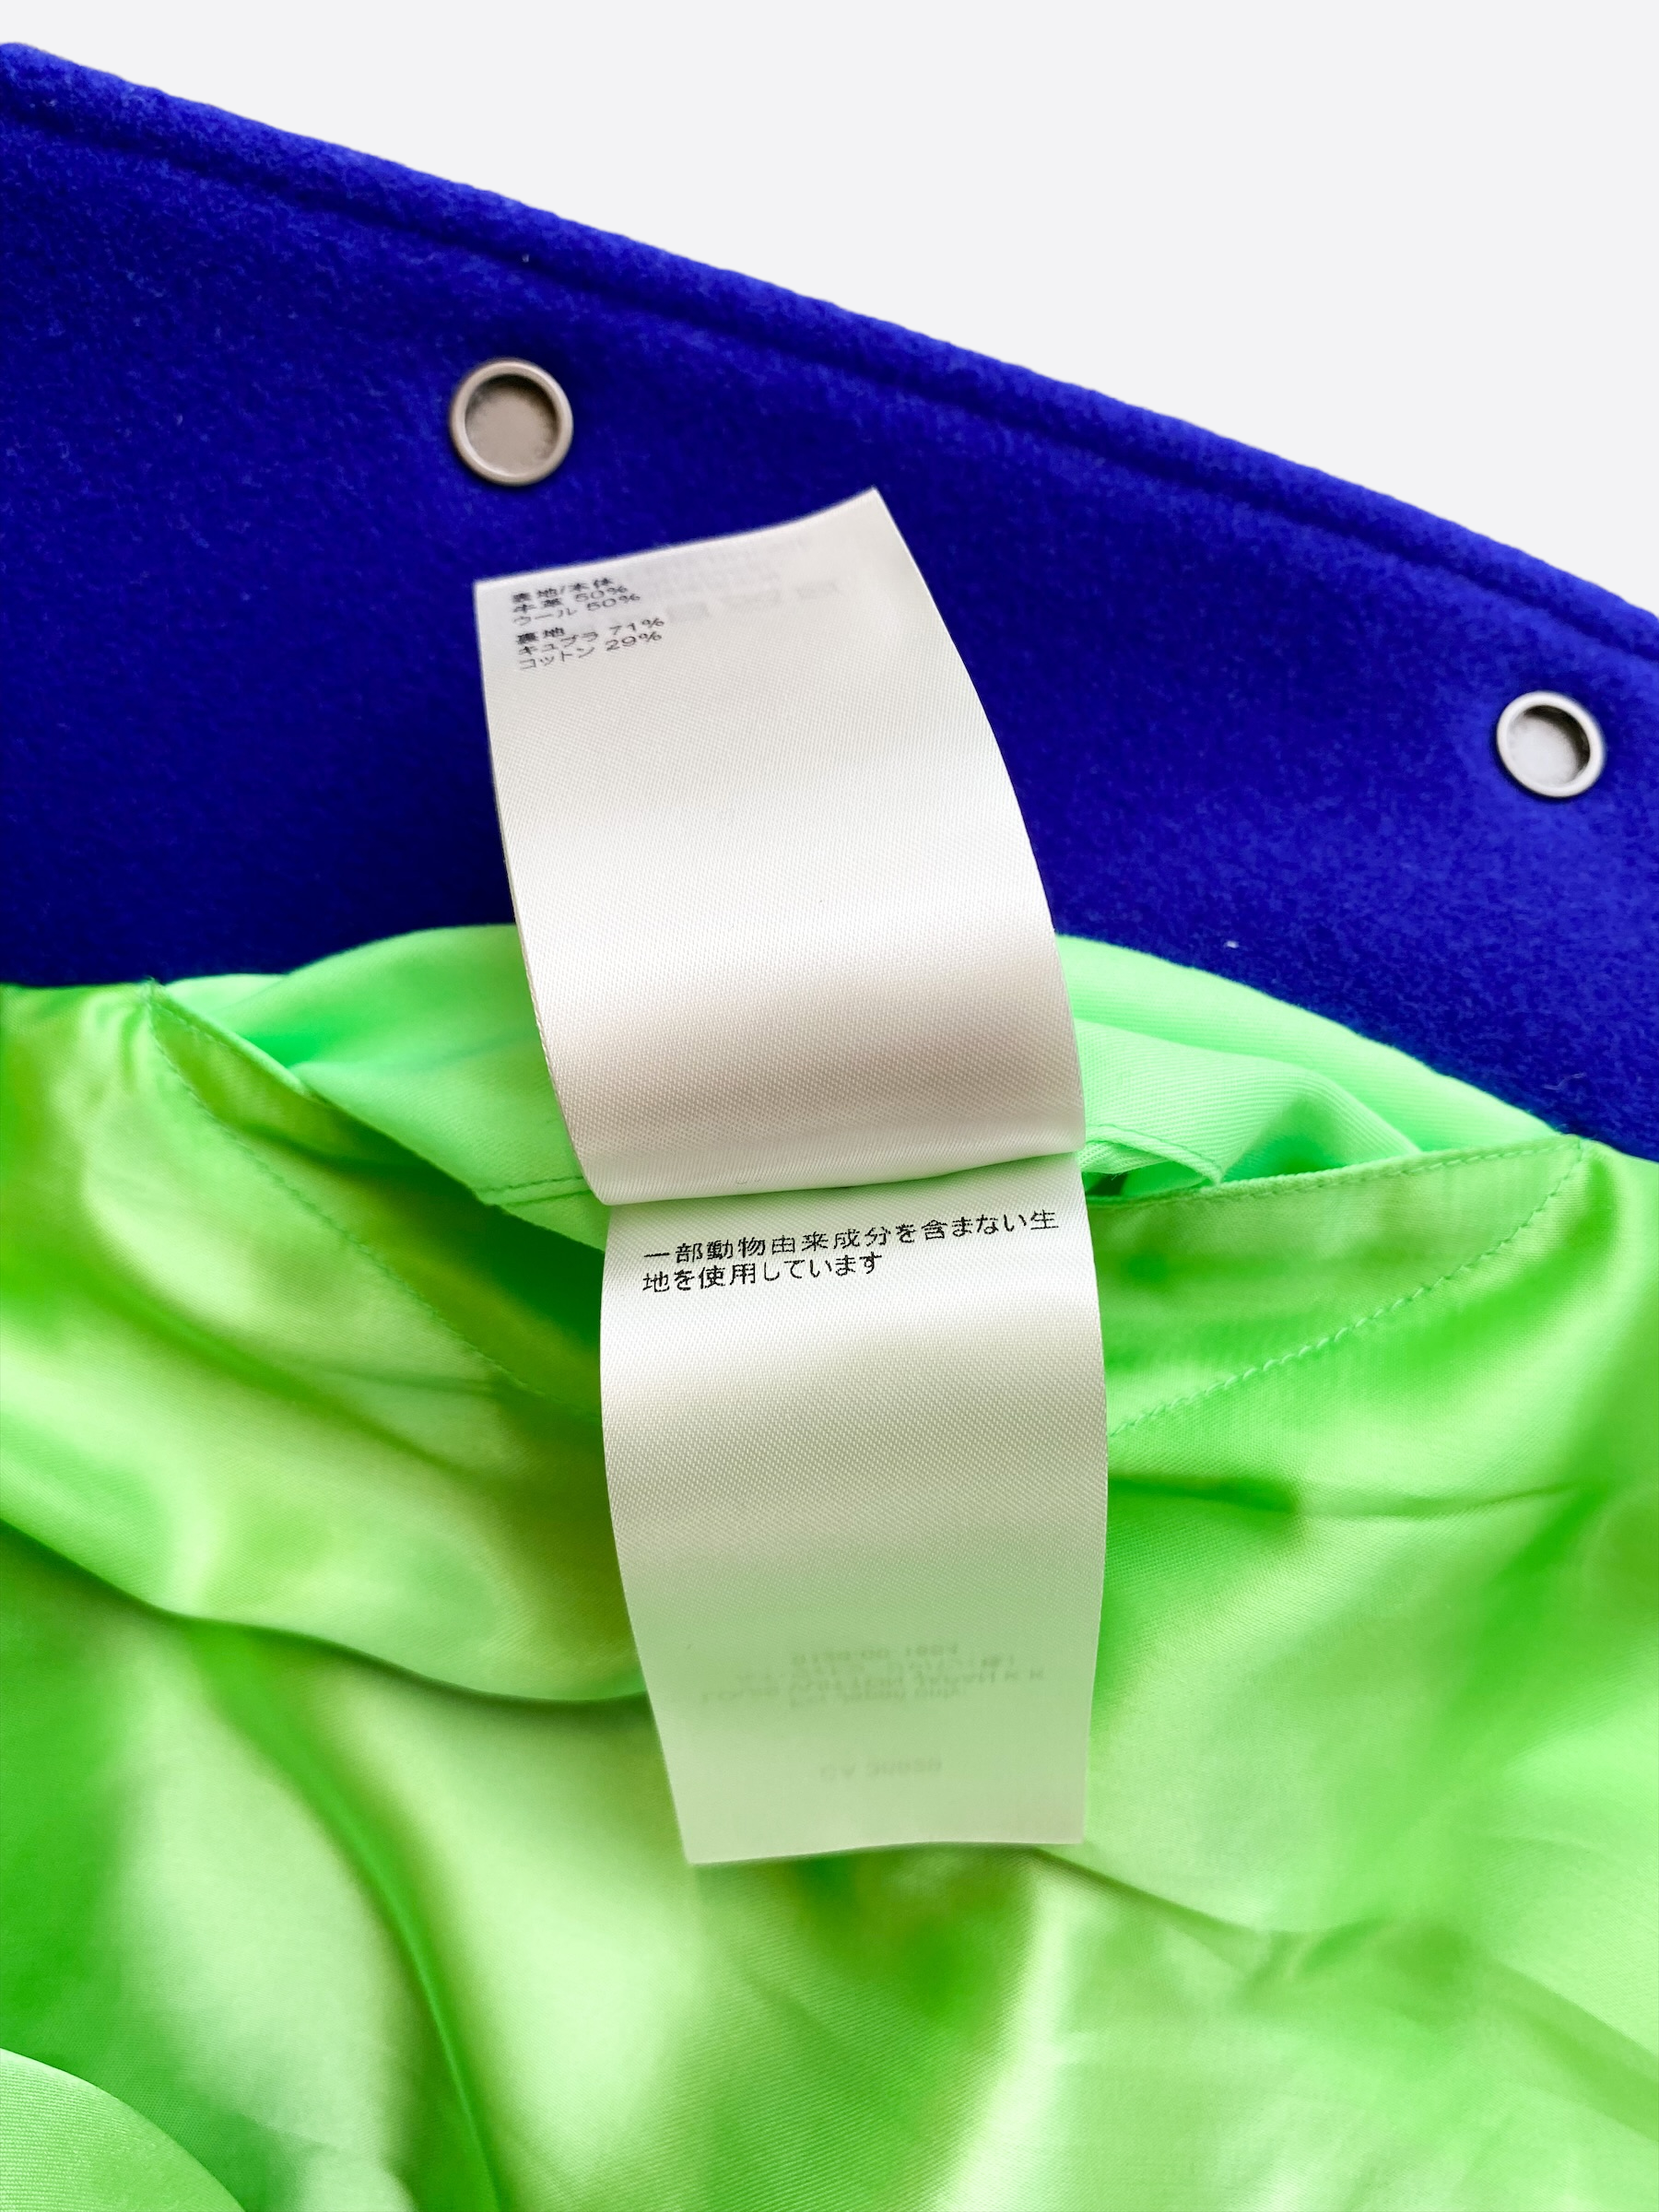 Louis Vuitton Neon Green & Yellow Gradient 'Running Man' Leather